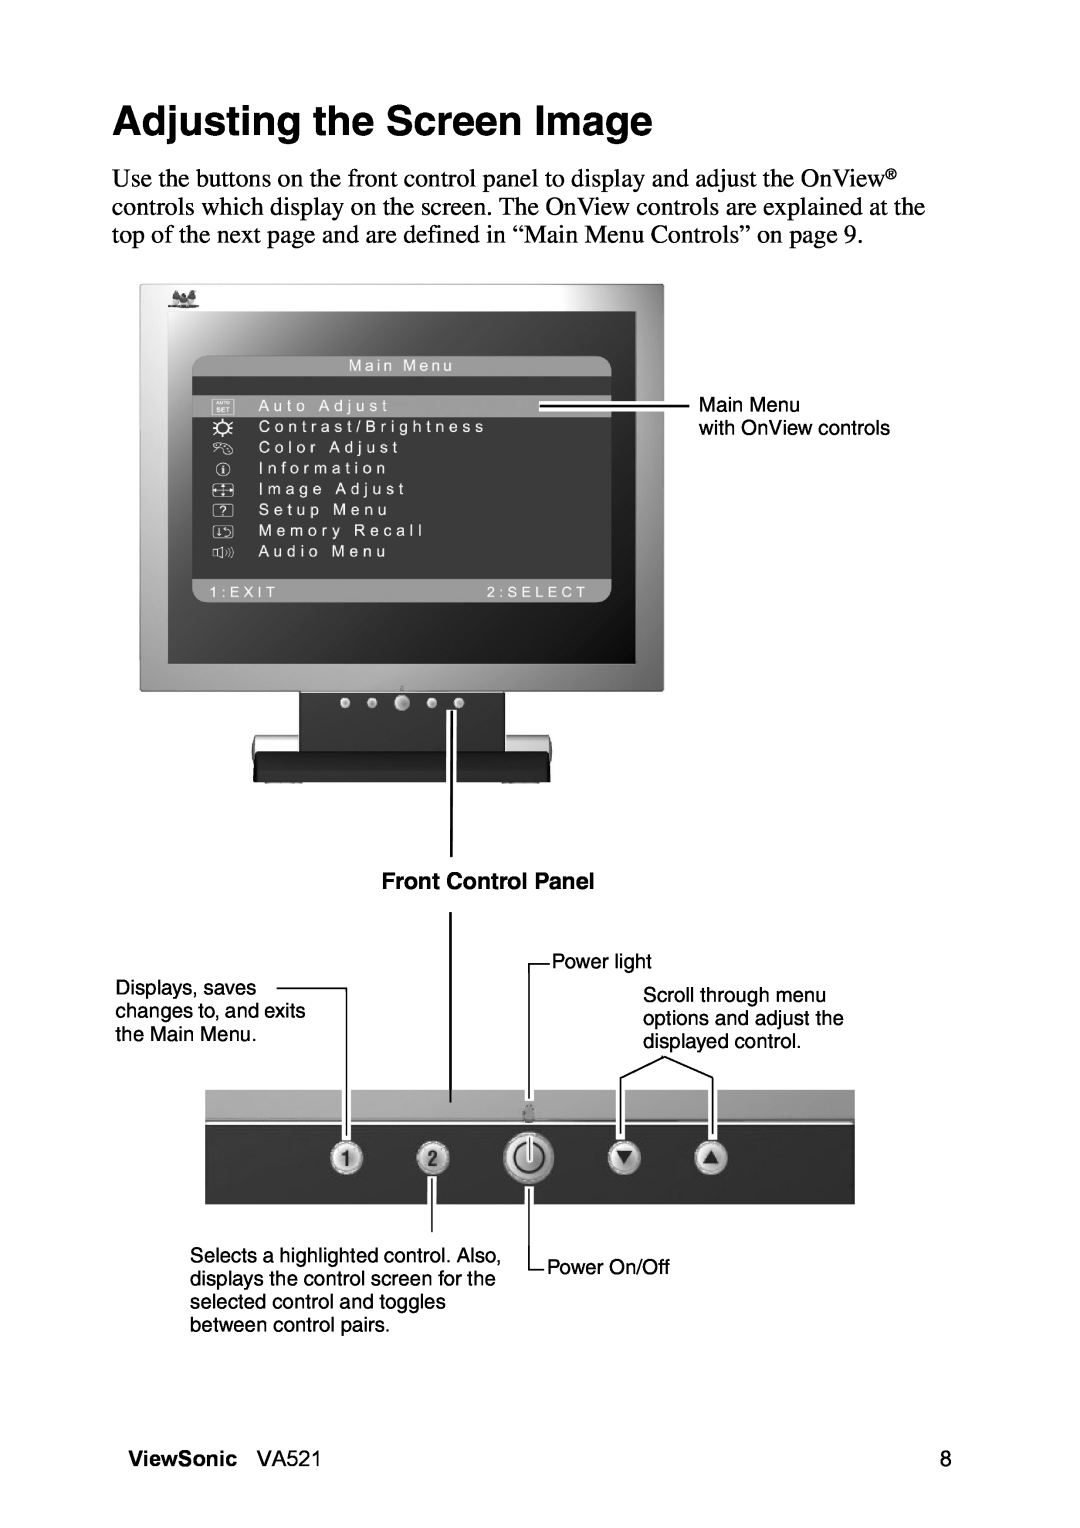 ViewSonic VA521 manual Adjusting the Screen Image, Front Control Panel 